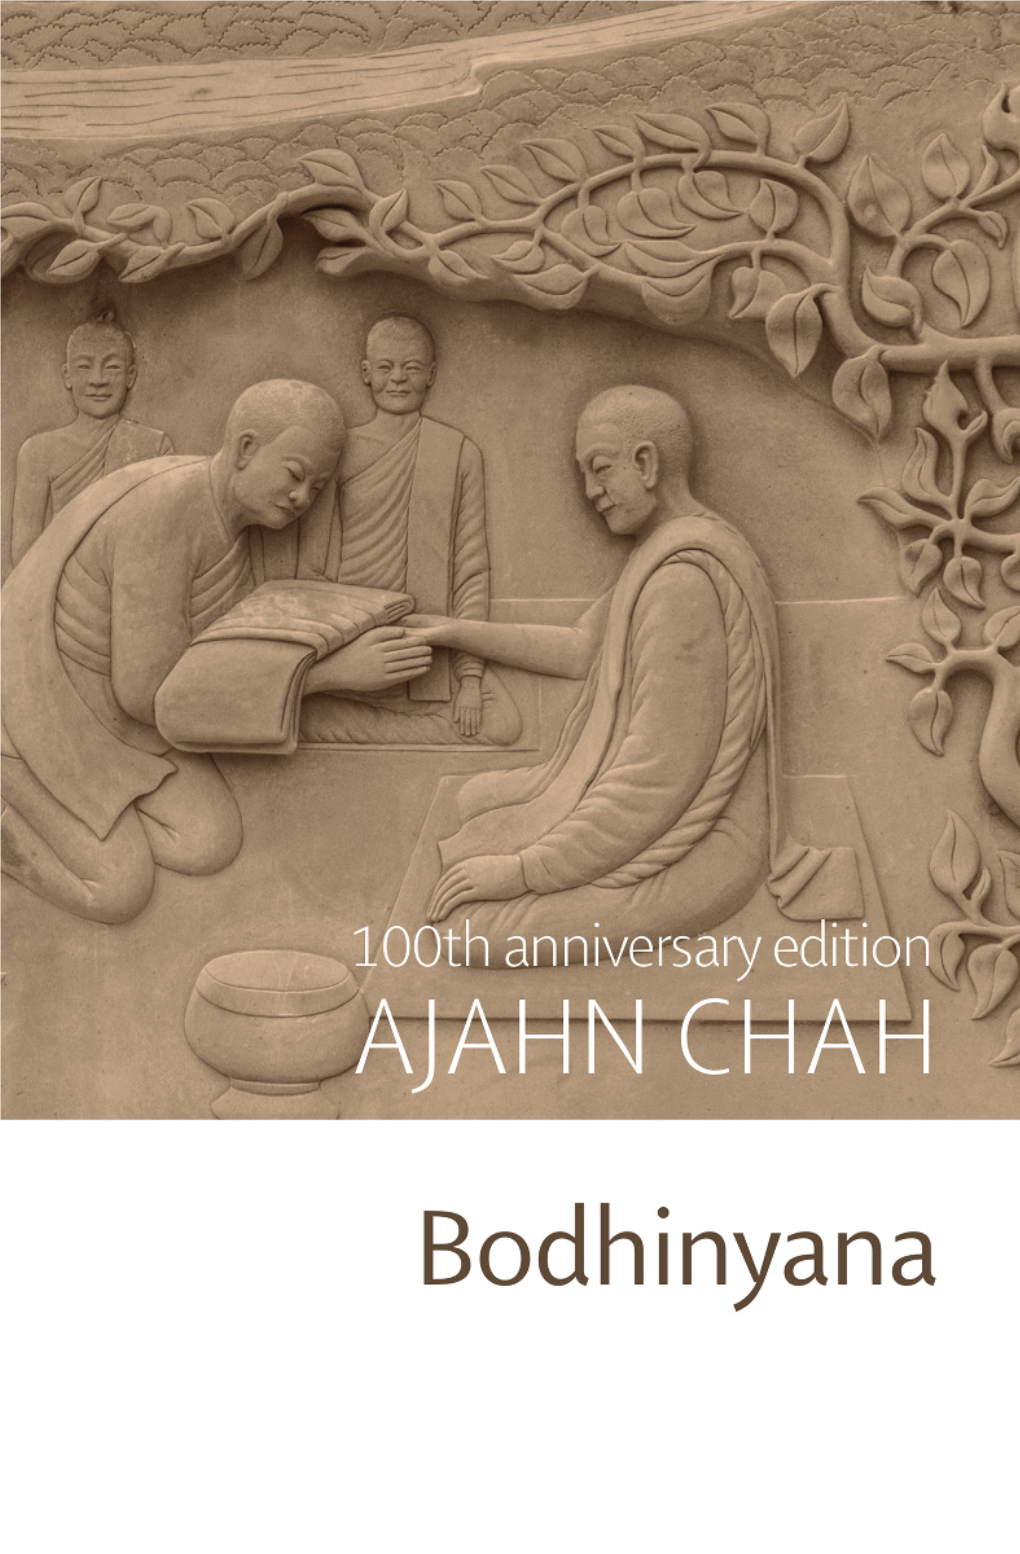 Bodhinyana by Ajahn Chah